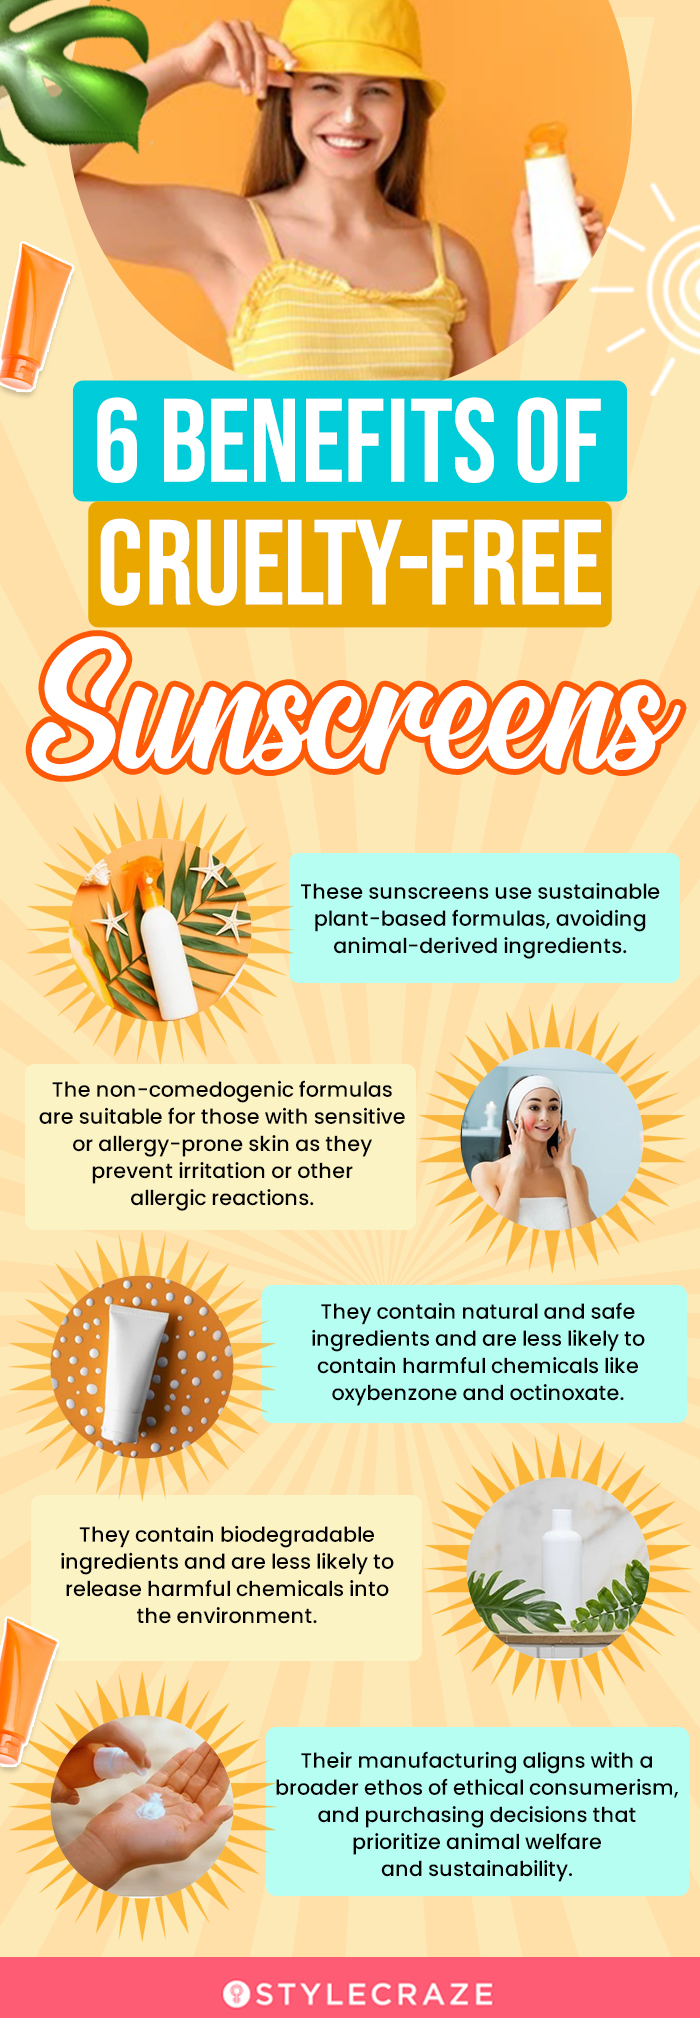 6 Benefits Of Cruelty-Free Sunscreens (infographic)